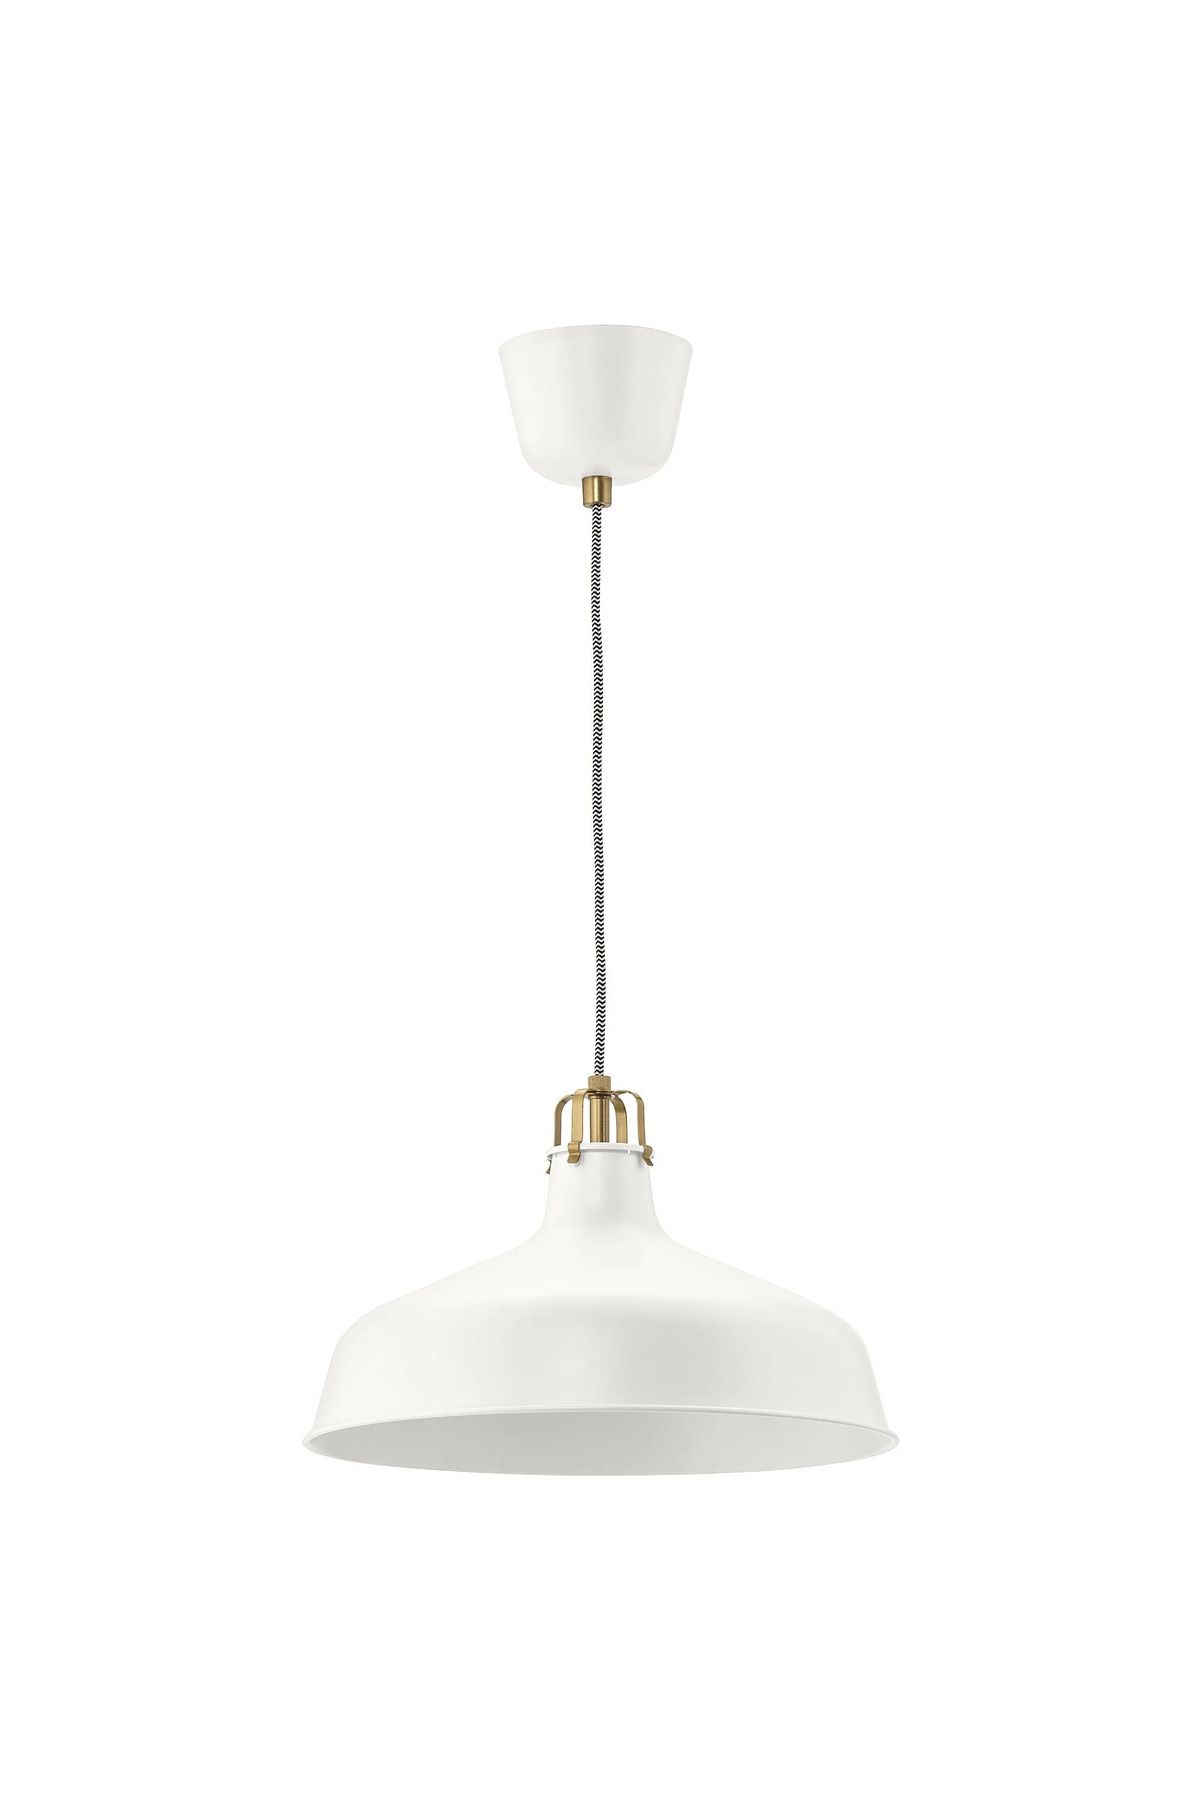 IKEA RANARP sarkıt lamba, 38 cm